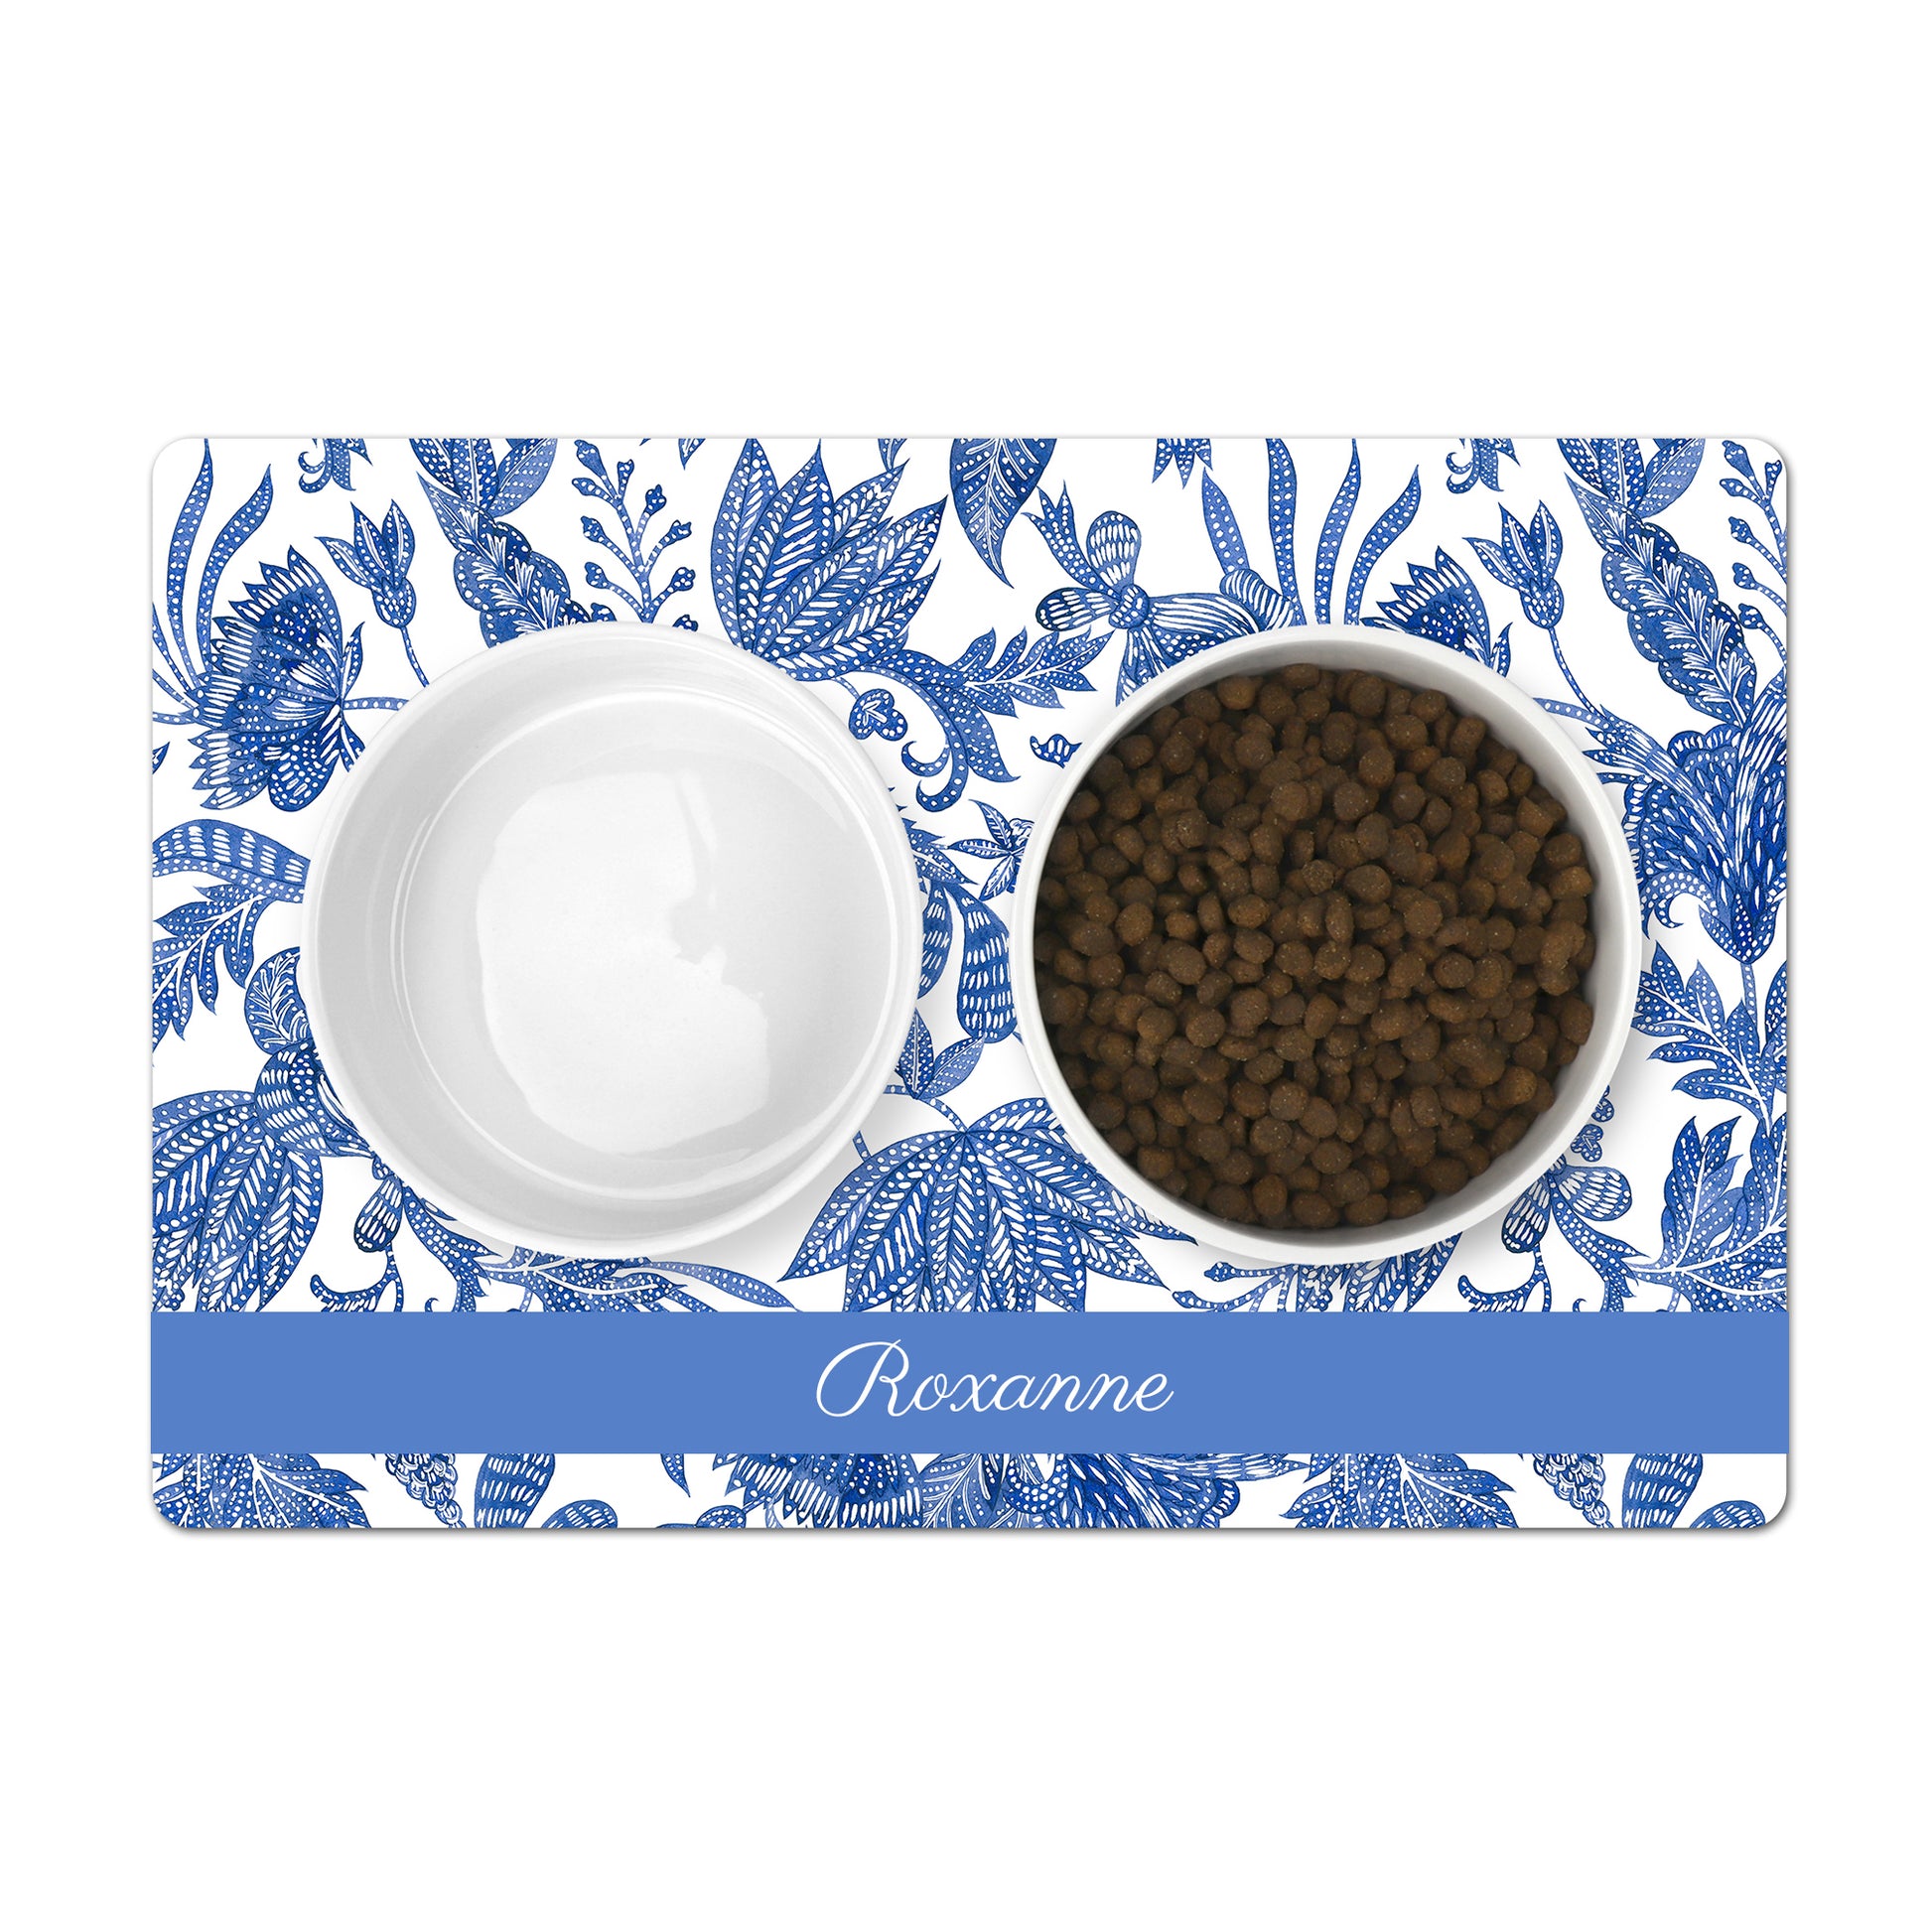 Personalised Pet Food Mat with Blue & White Floral Batik Print